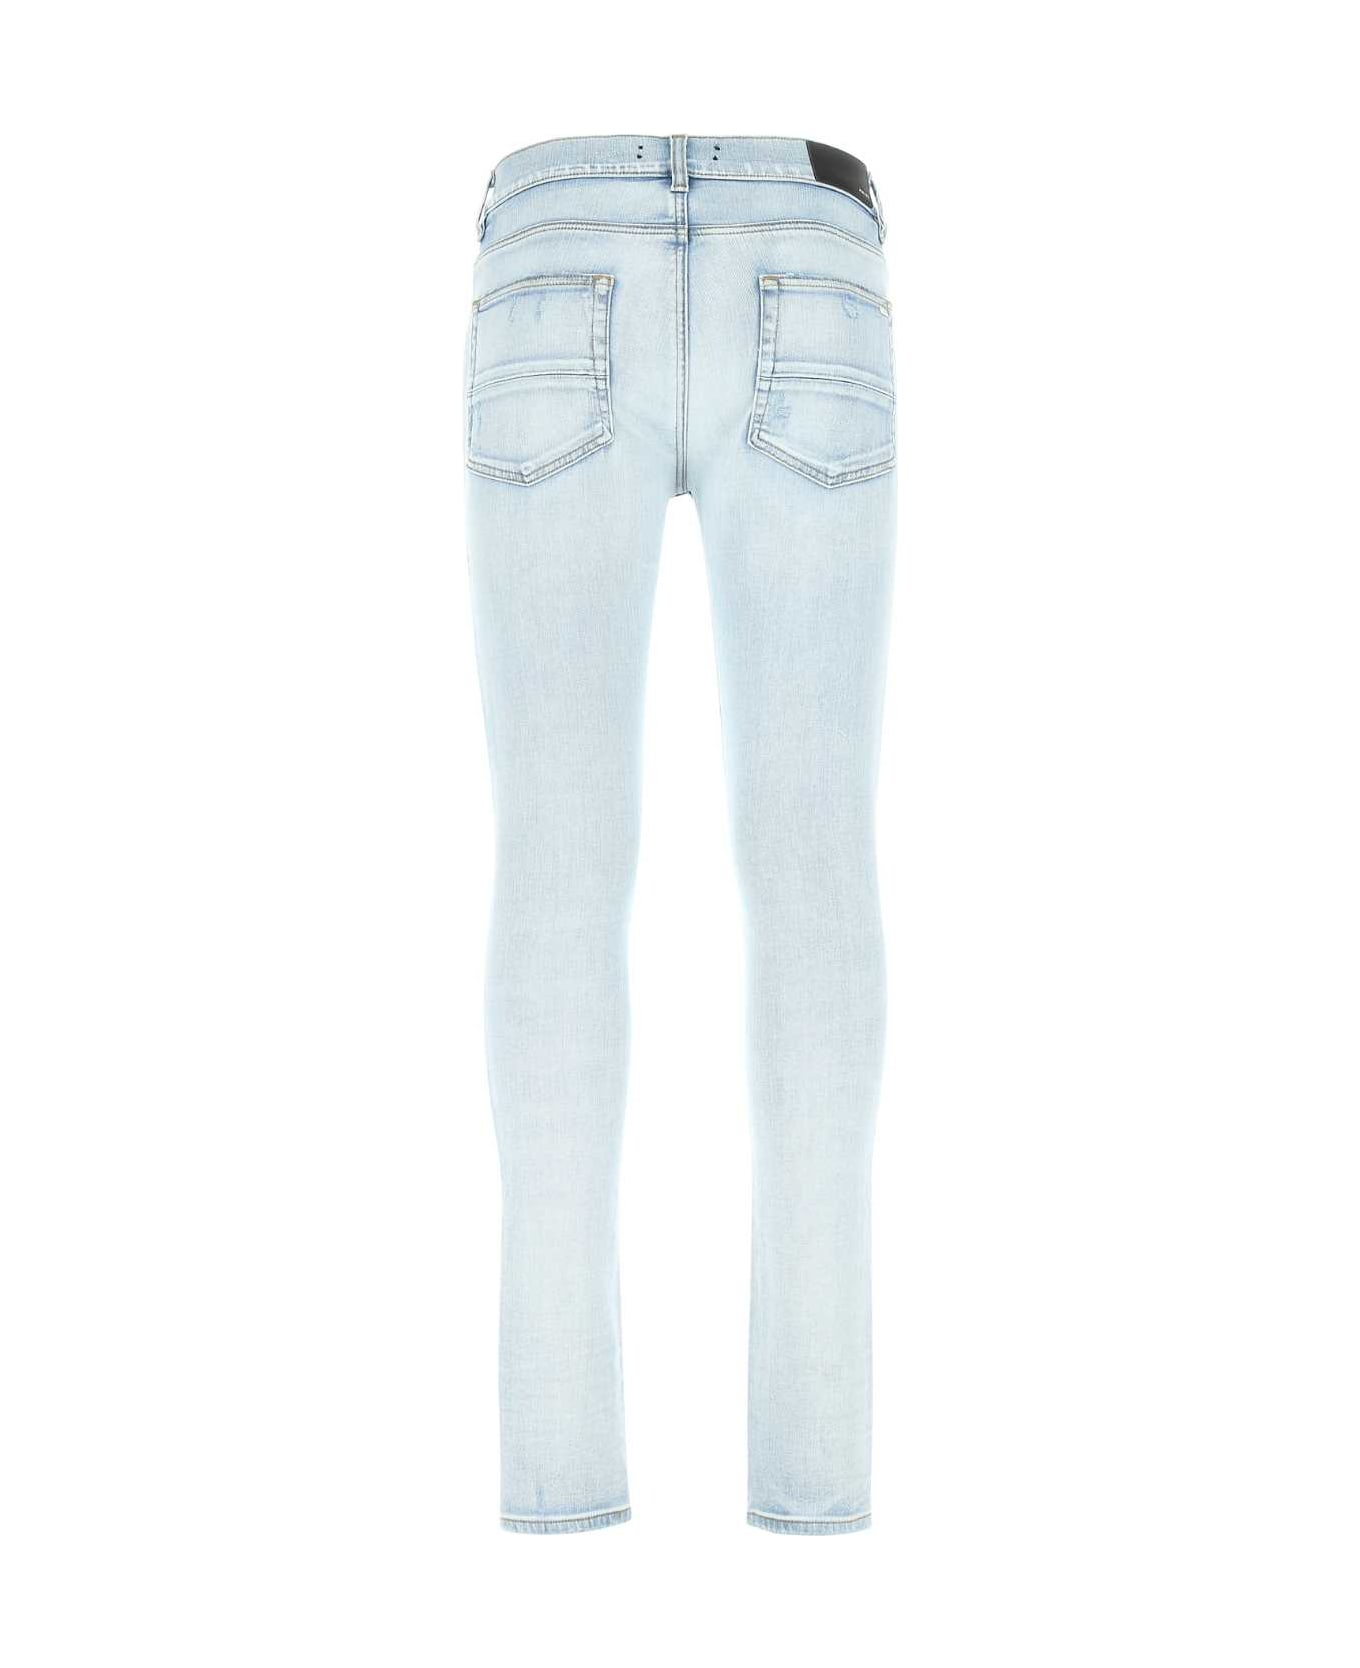 AMIRI Stretch Denim Jeans - 485 デニム